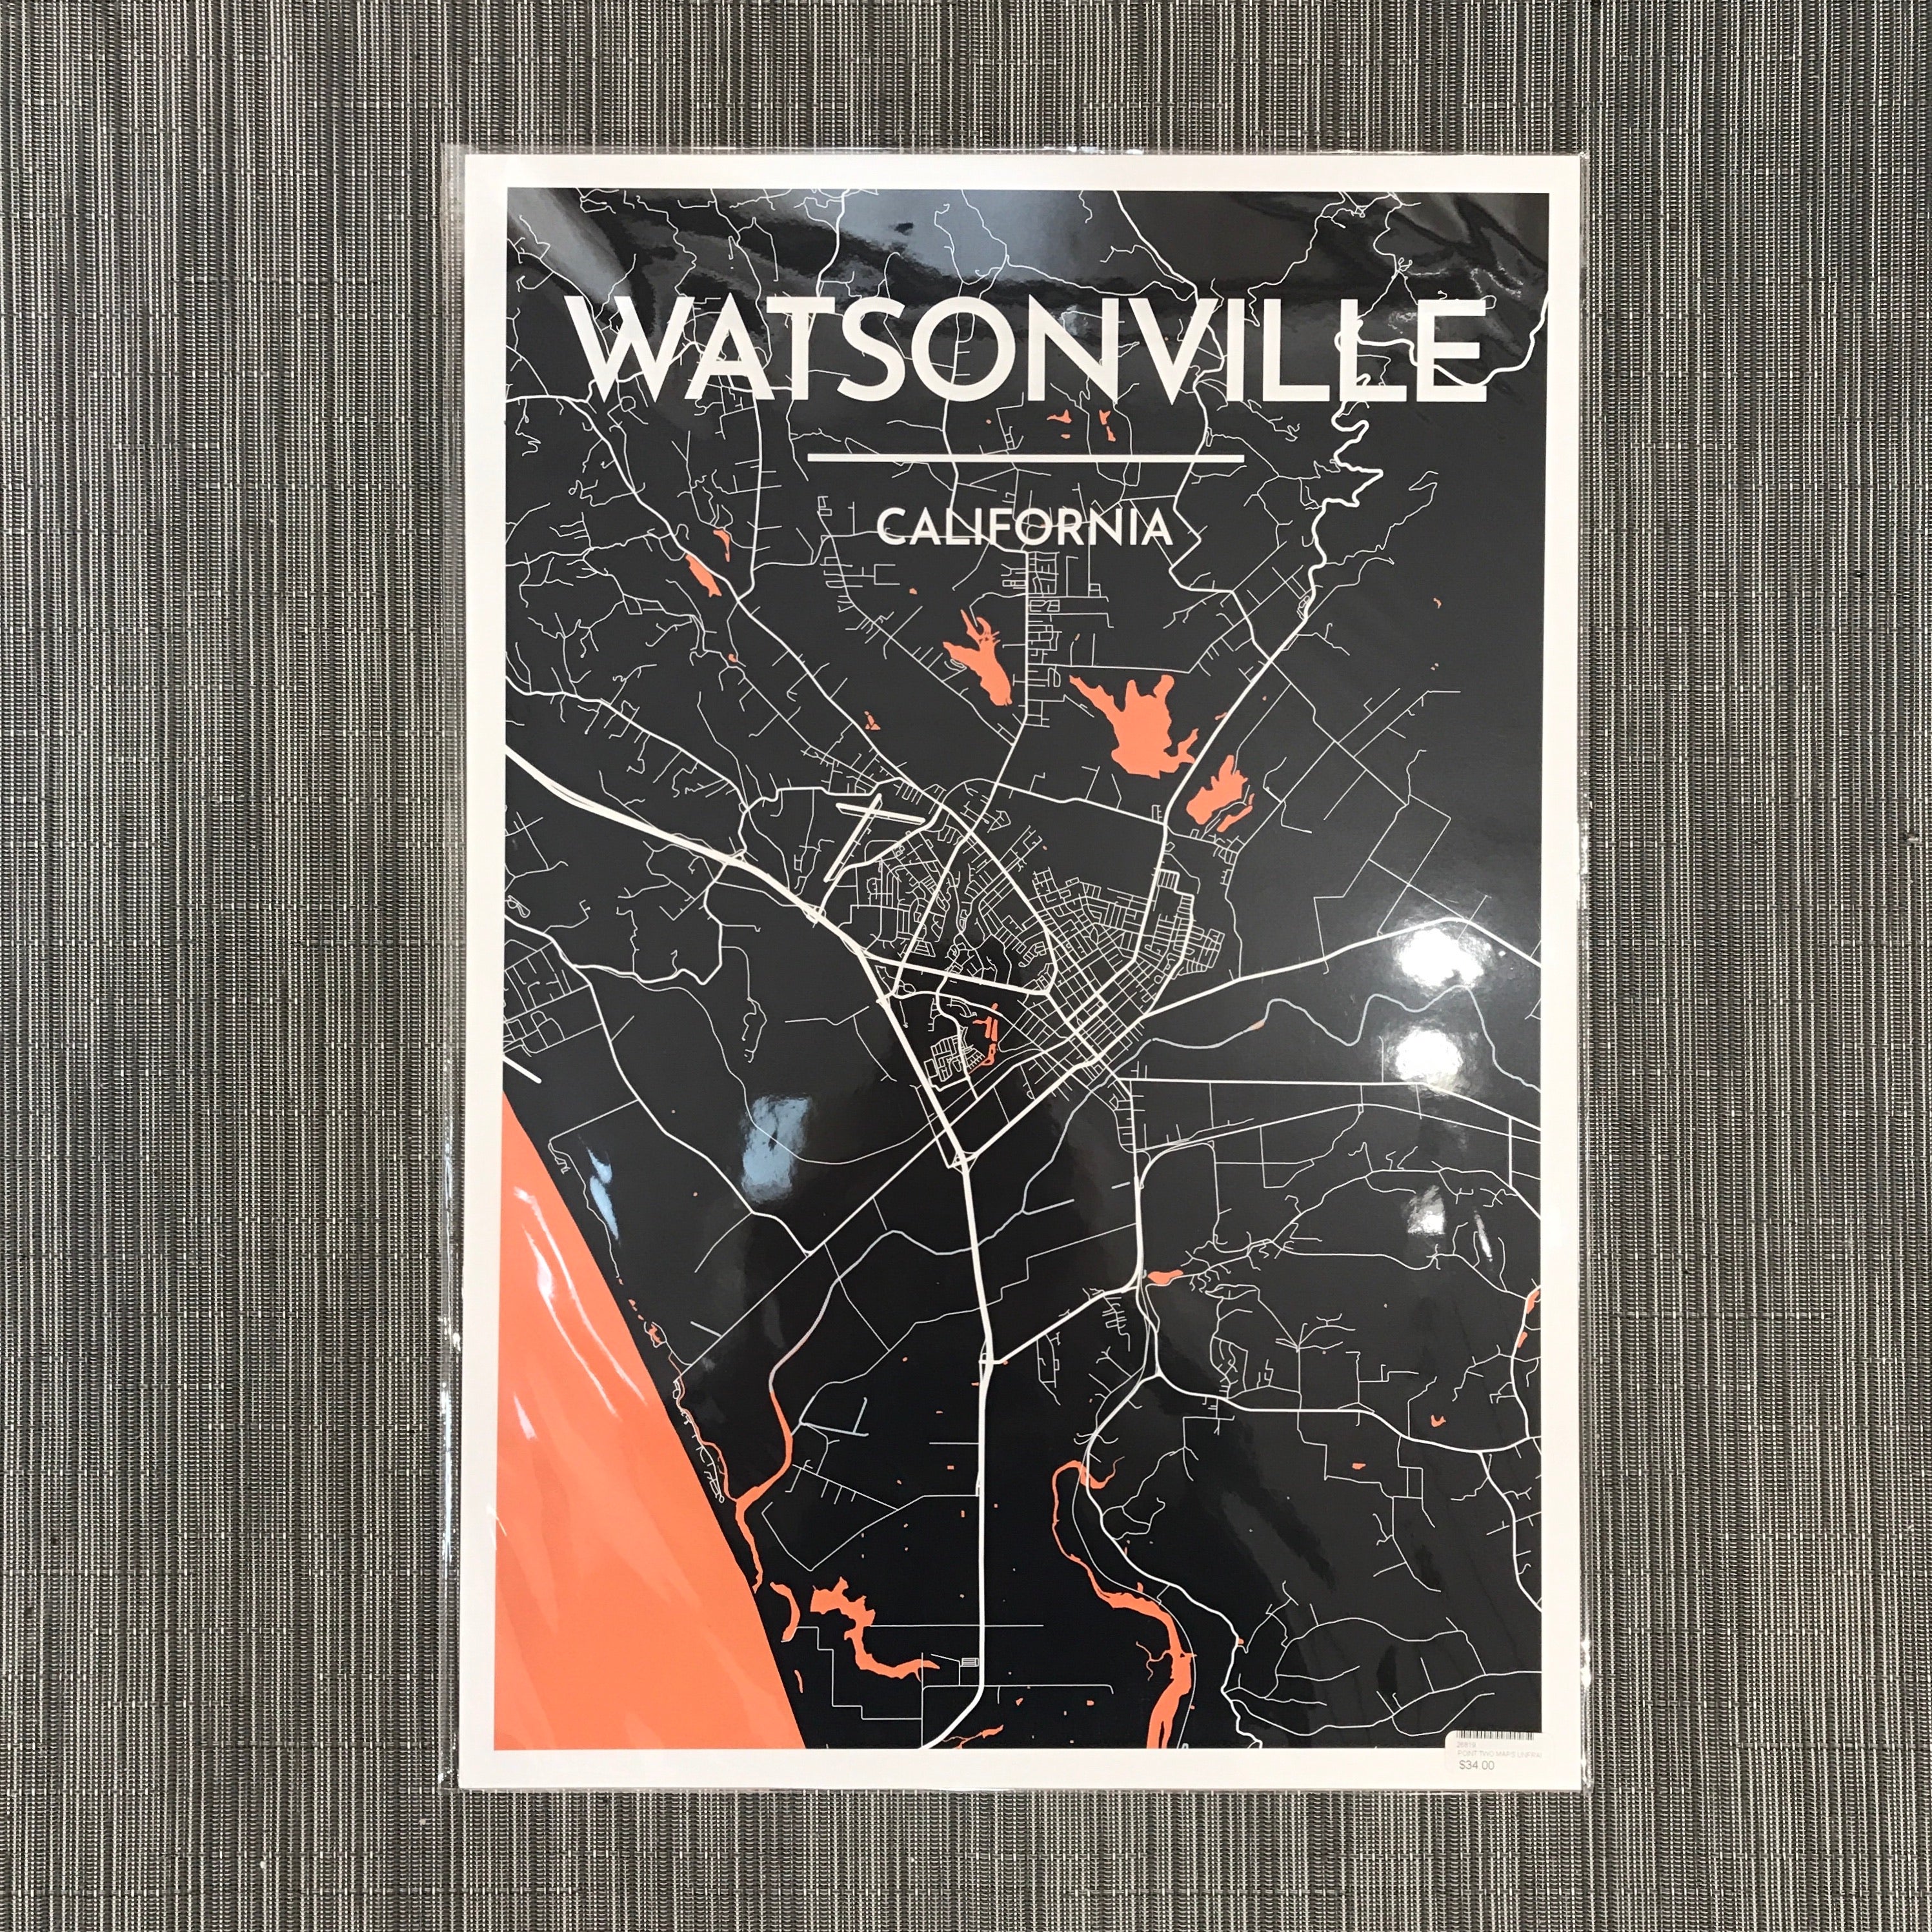 Watsonville California City Map Poster